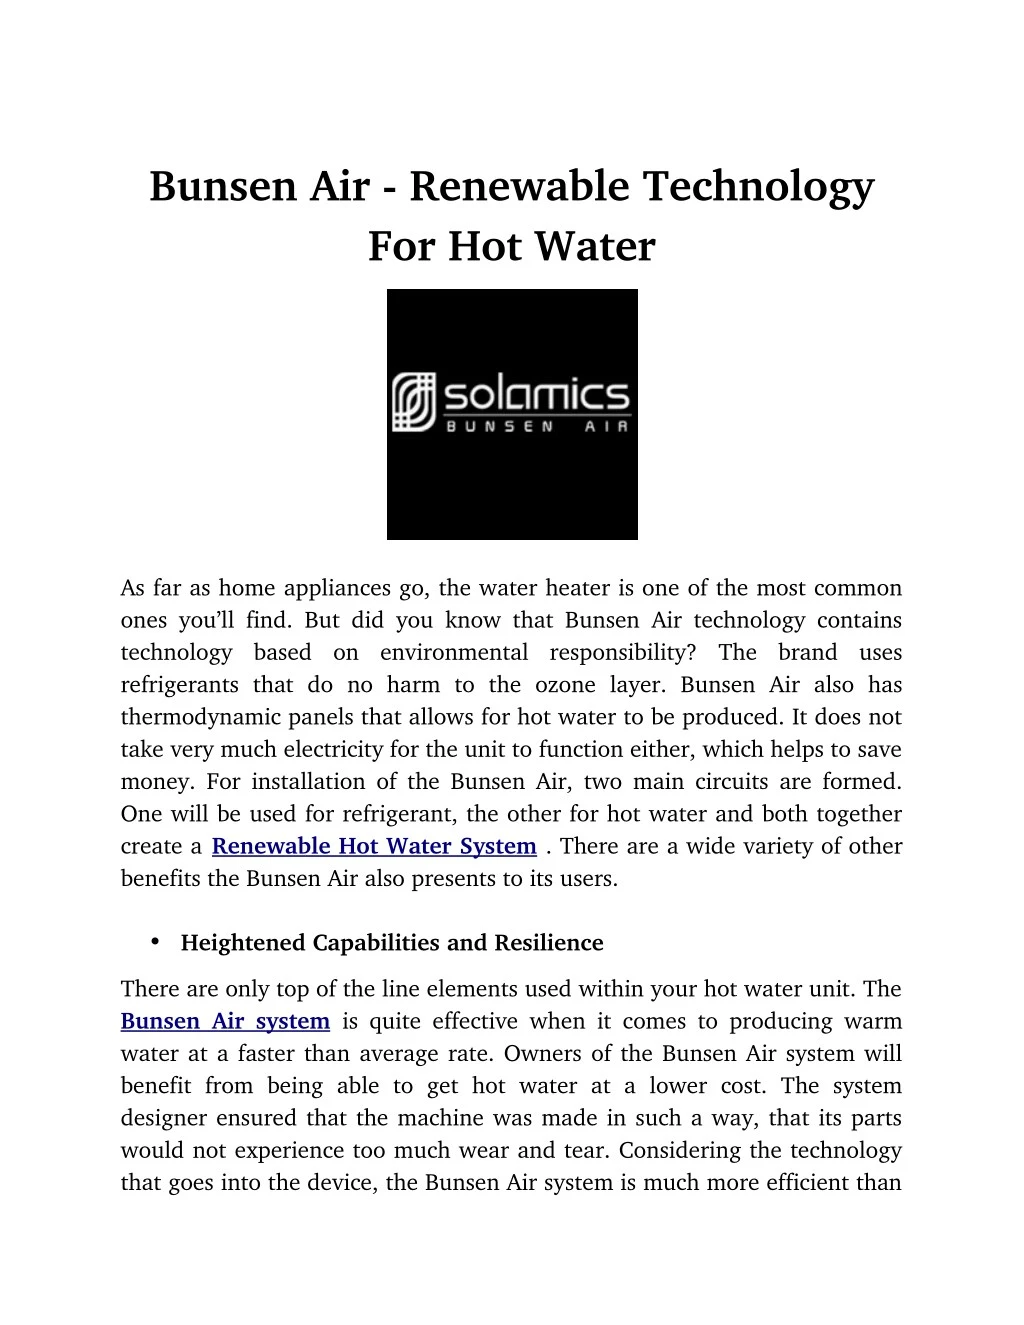 bunsen air renewable technology for hot water